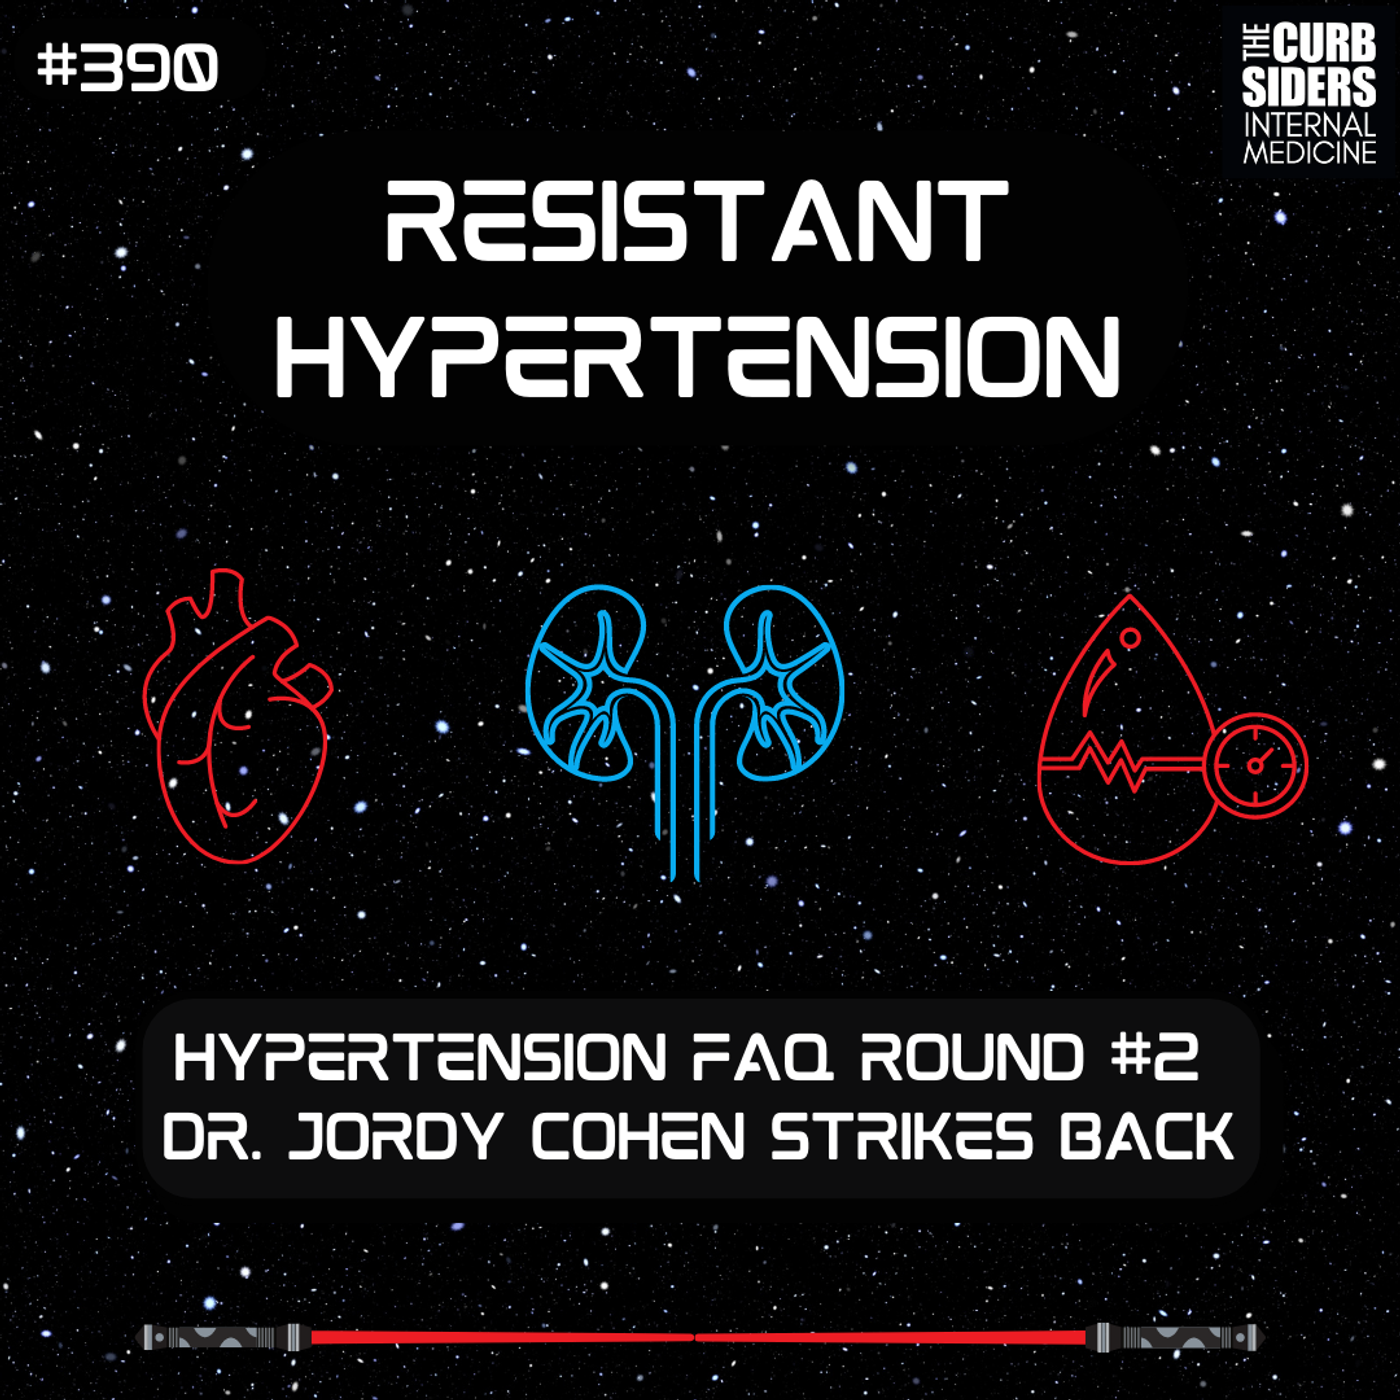 #390 Resistant Hypertension